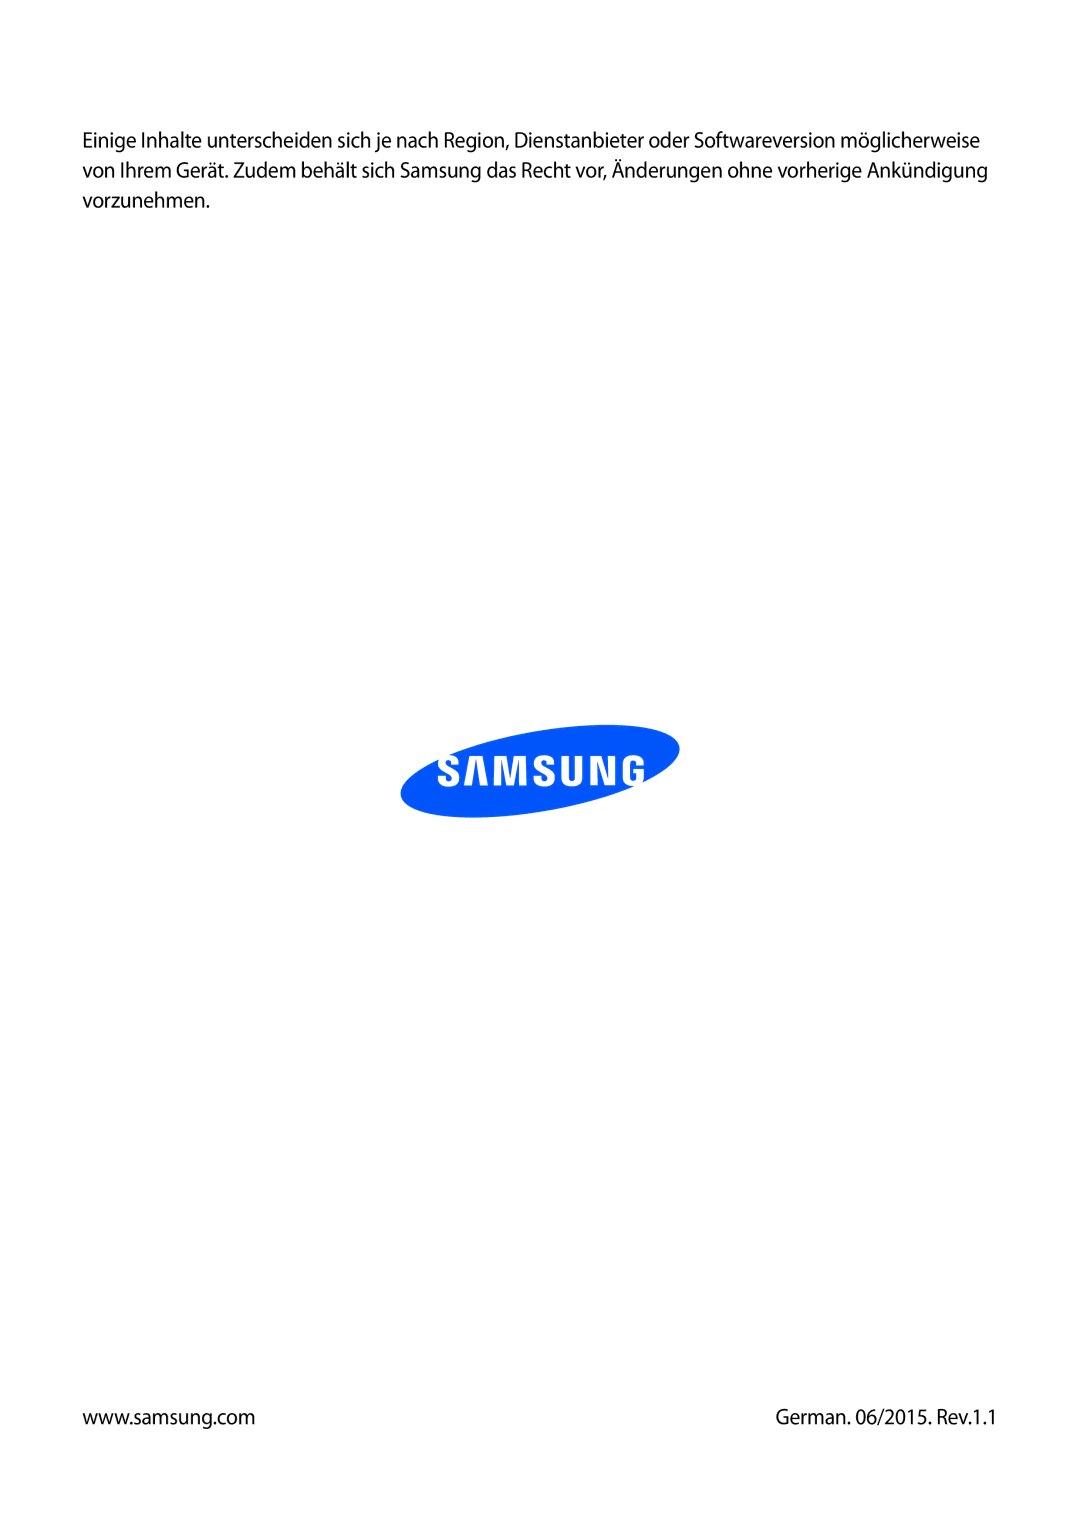 Samsung SM-T320XZWADBT, SM-T320NZKAATO, SM-T320NZKATUR, SM-T320NZWATUR, SM-T320NZKATPH, SM-T320NZWATPH German /2015. Rev.1.1 